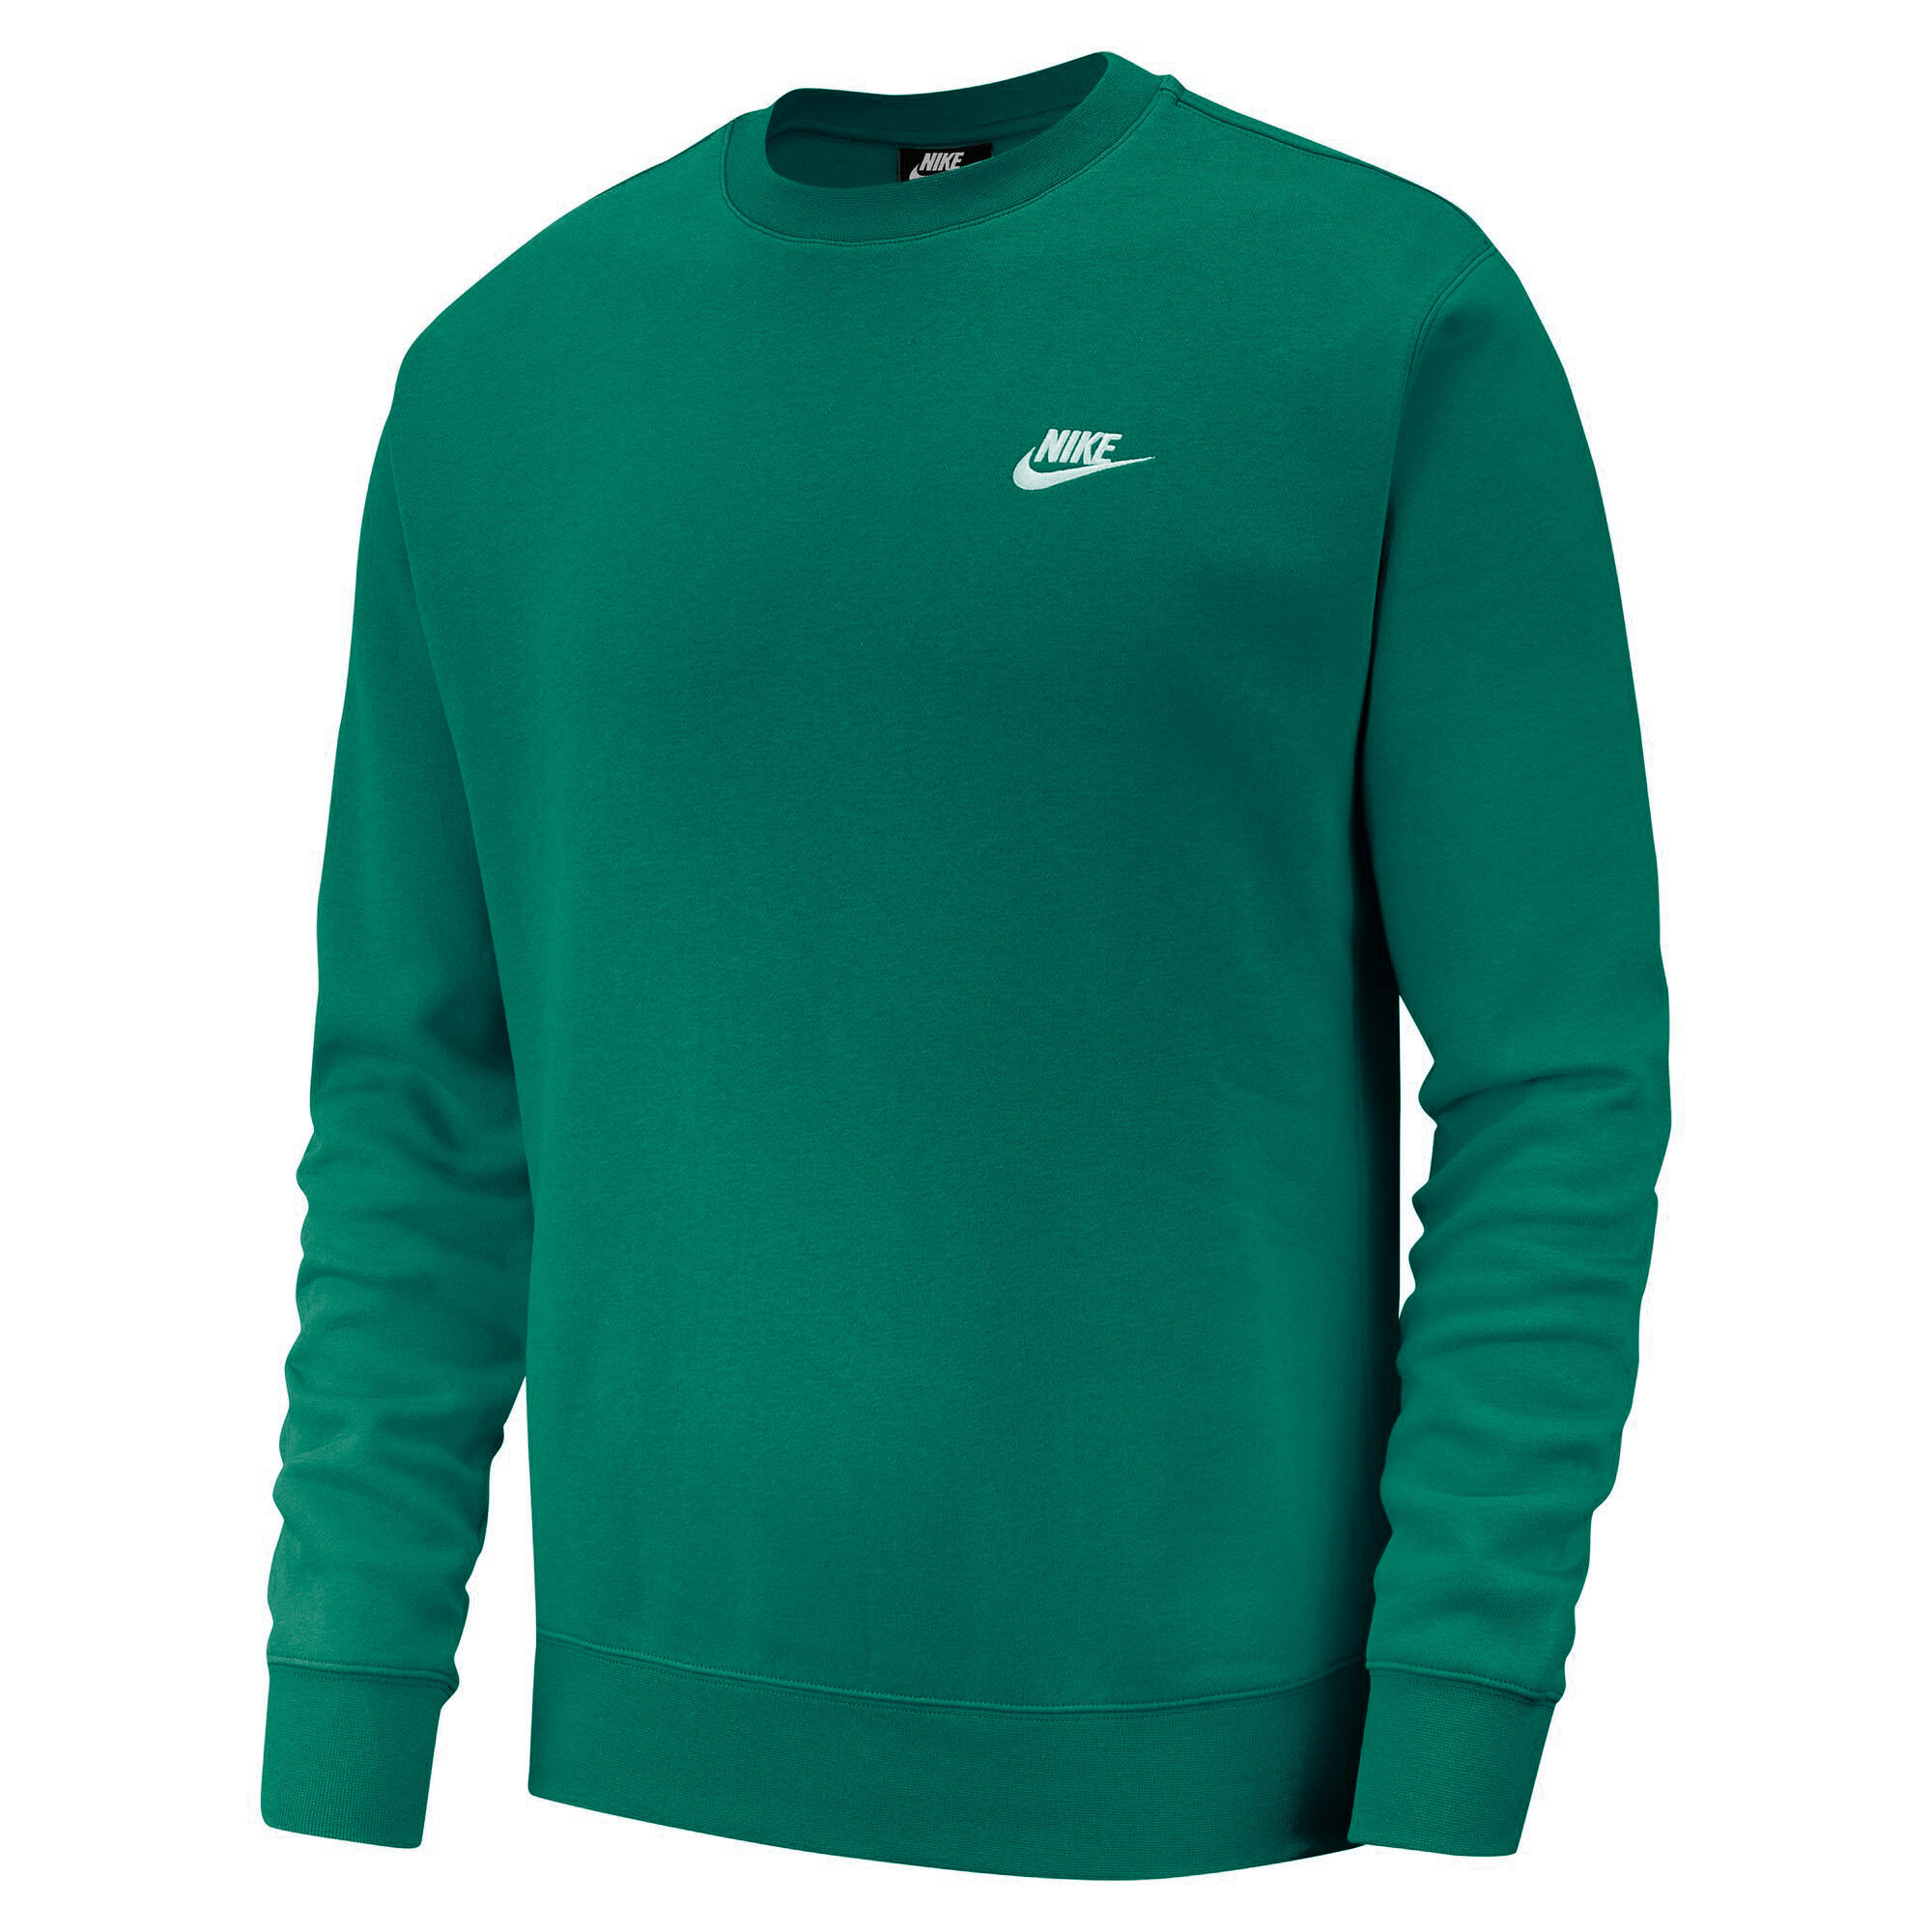 Nike Club Fleece crew neck sweatshirt in green